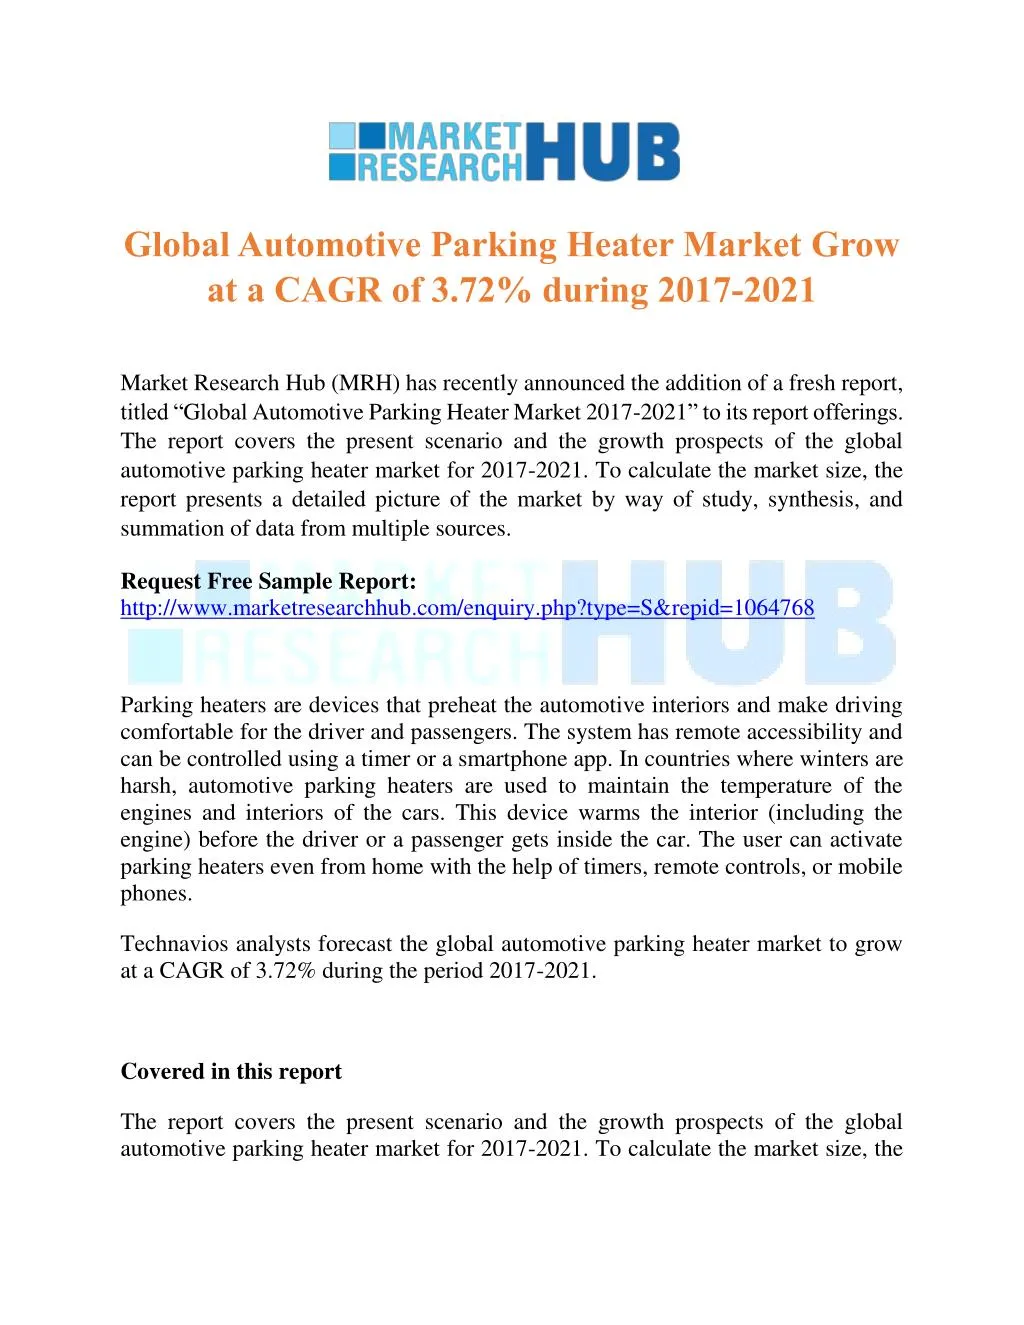 global automotive parking heater market grow